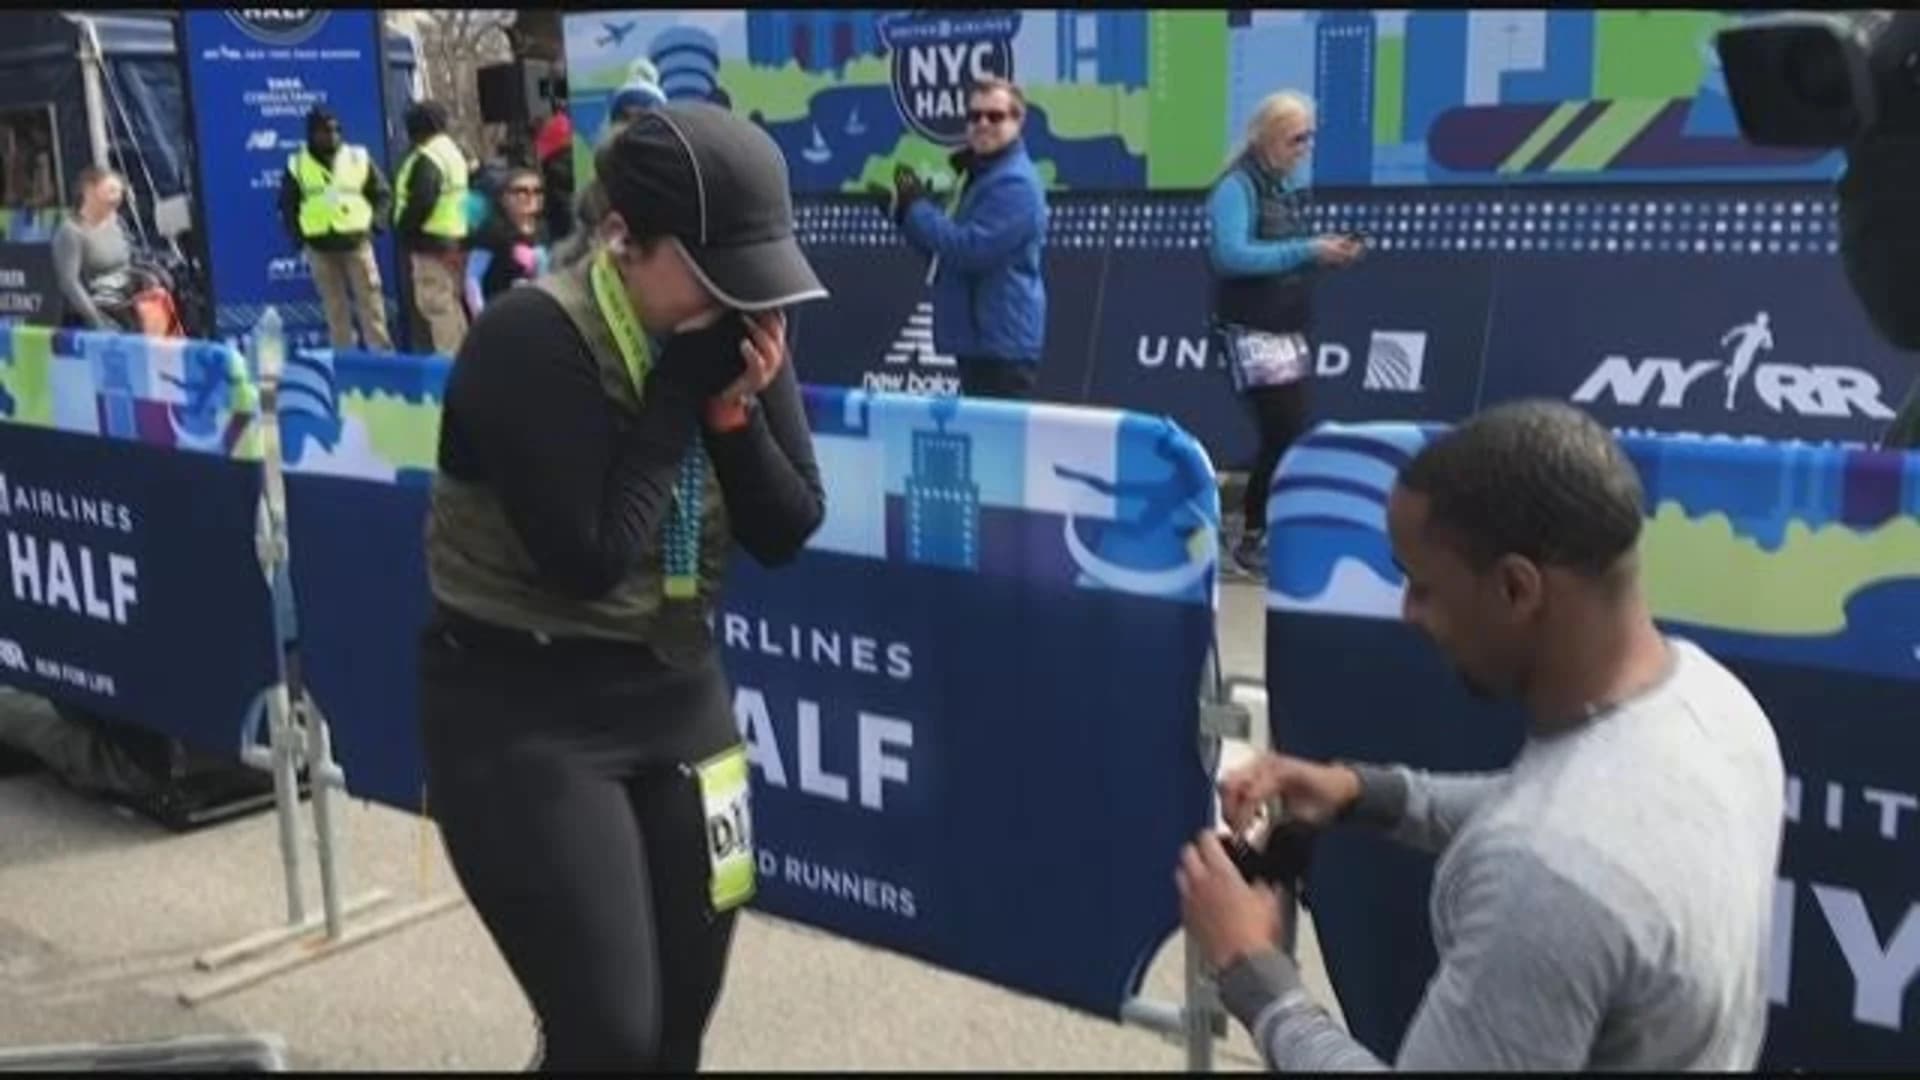 Engaging situation: Man proposes at NYC Half Marathon finish line